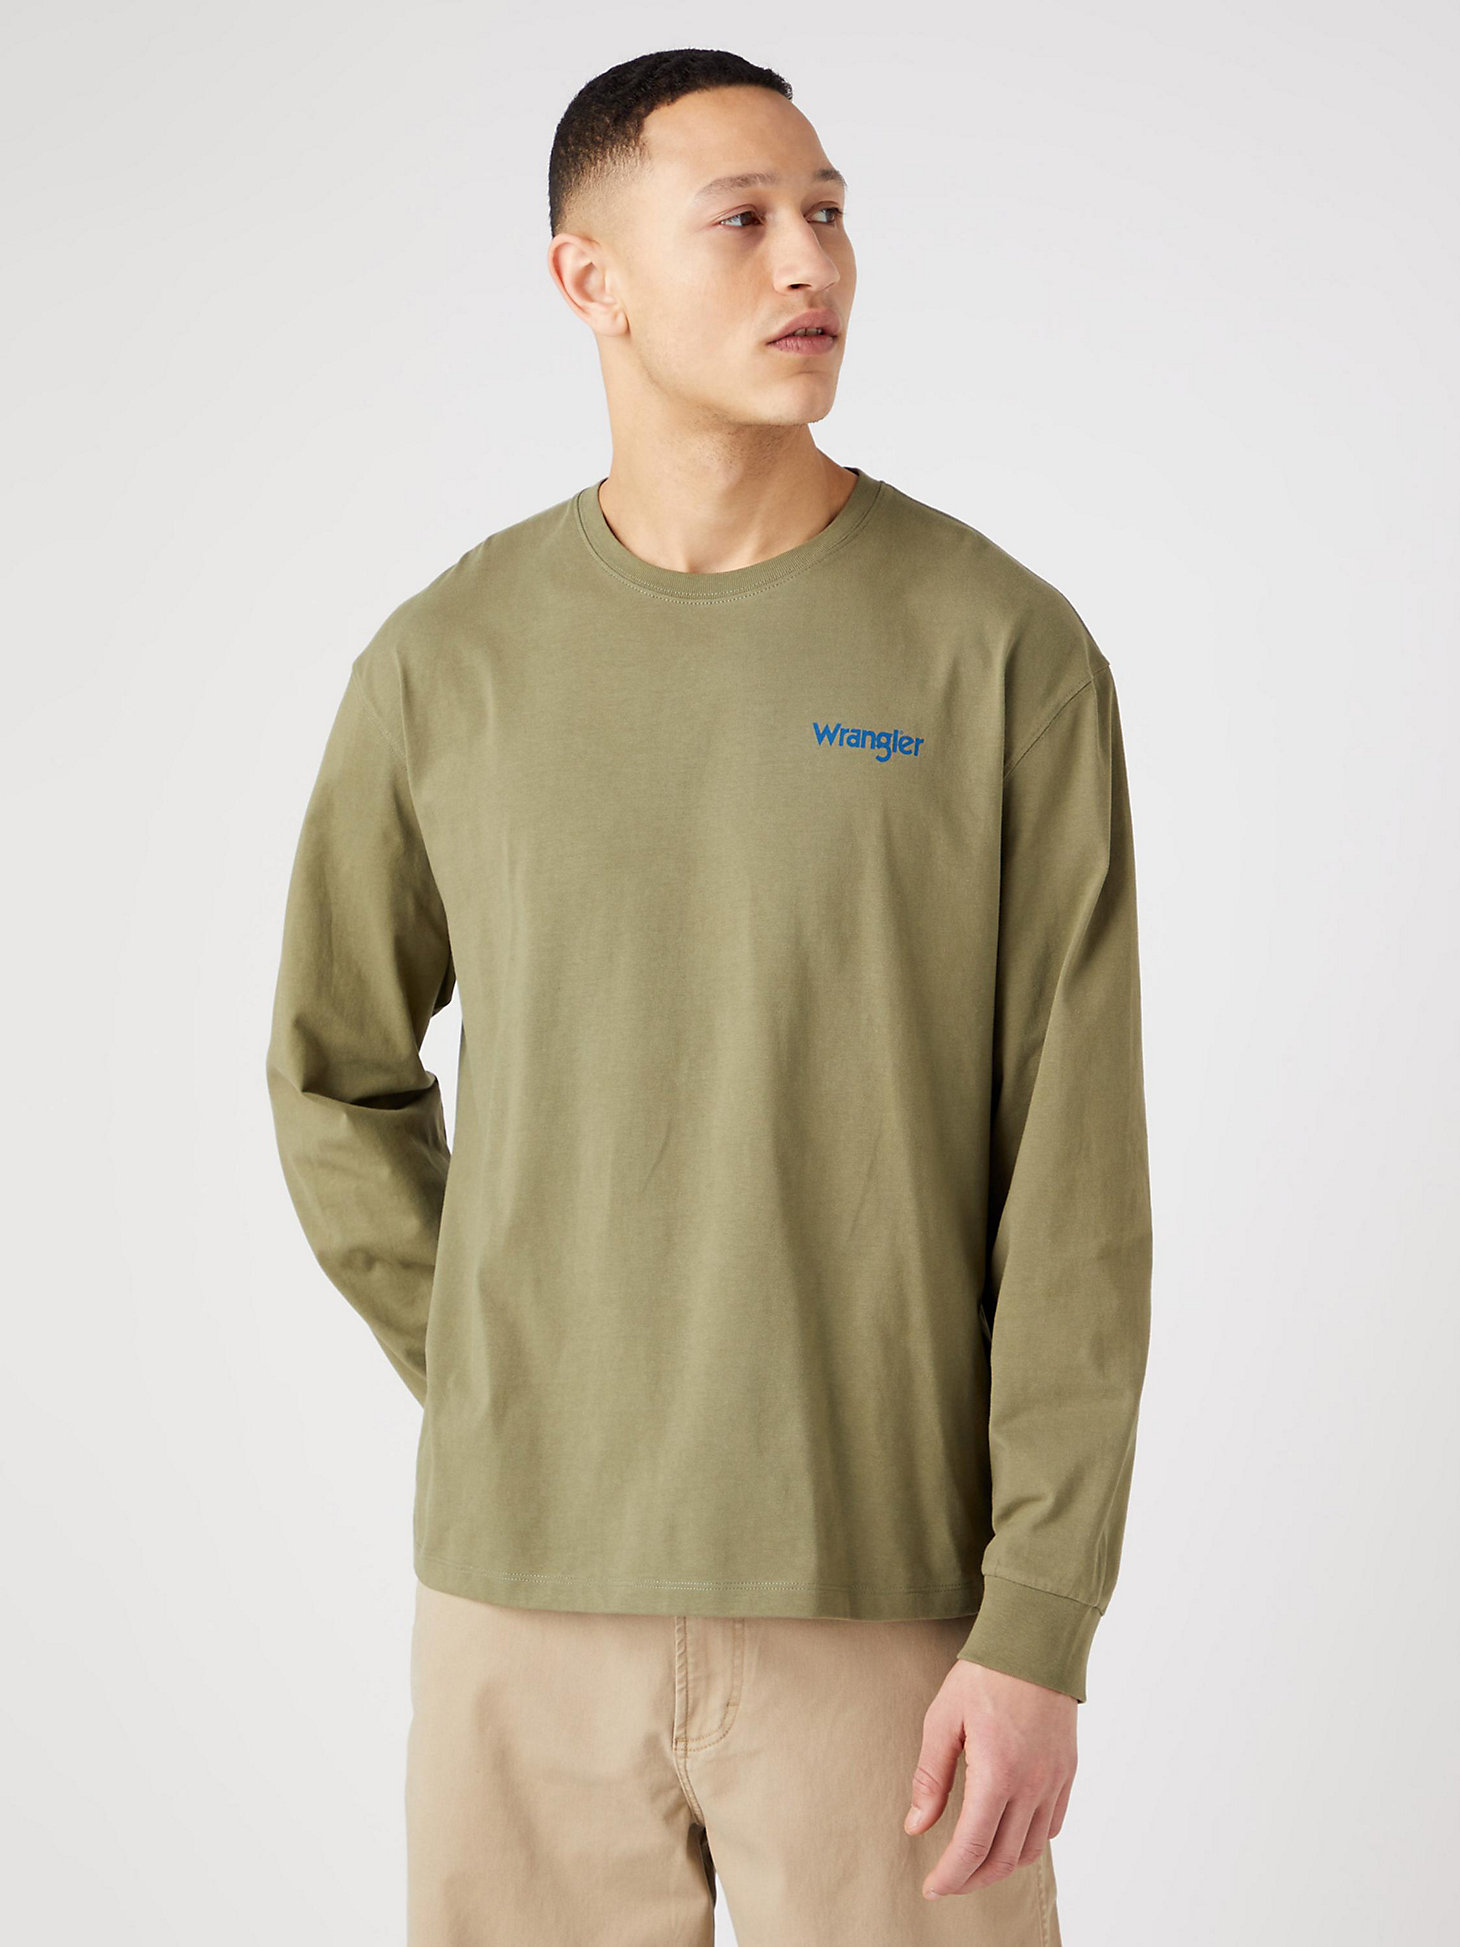 Men's Casey Jones Vintage Fit T-Shirt in Deep Lichen Green main view